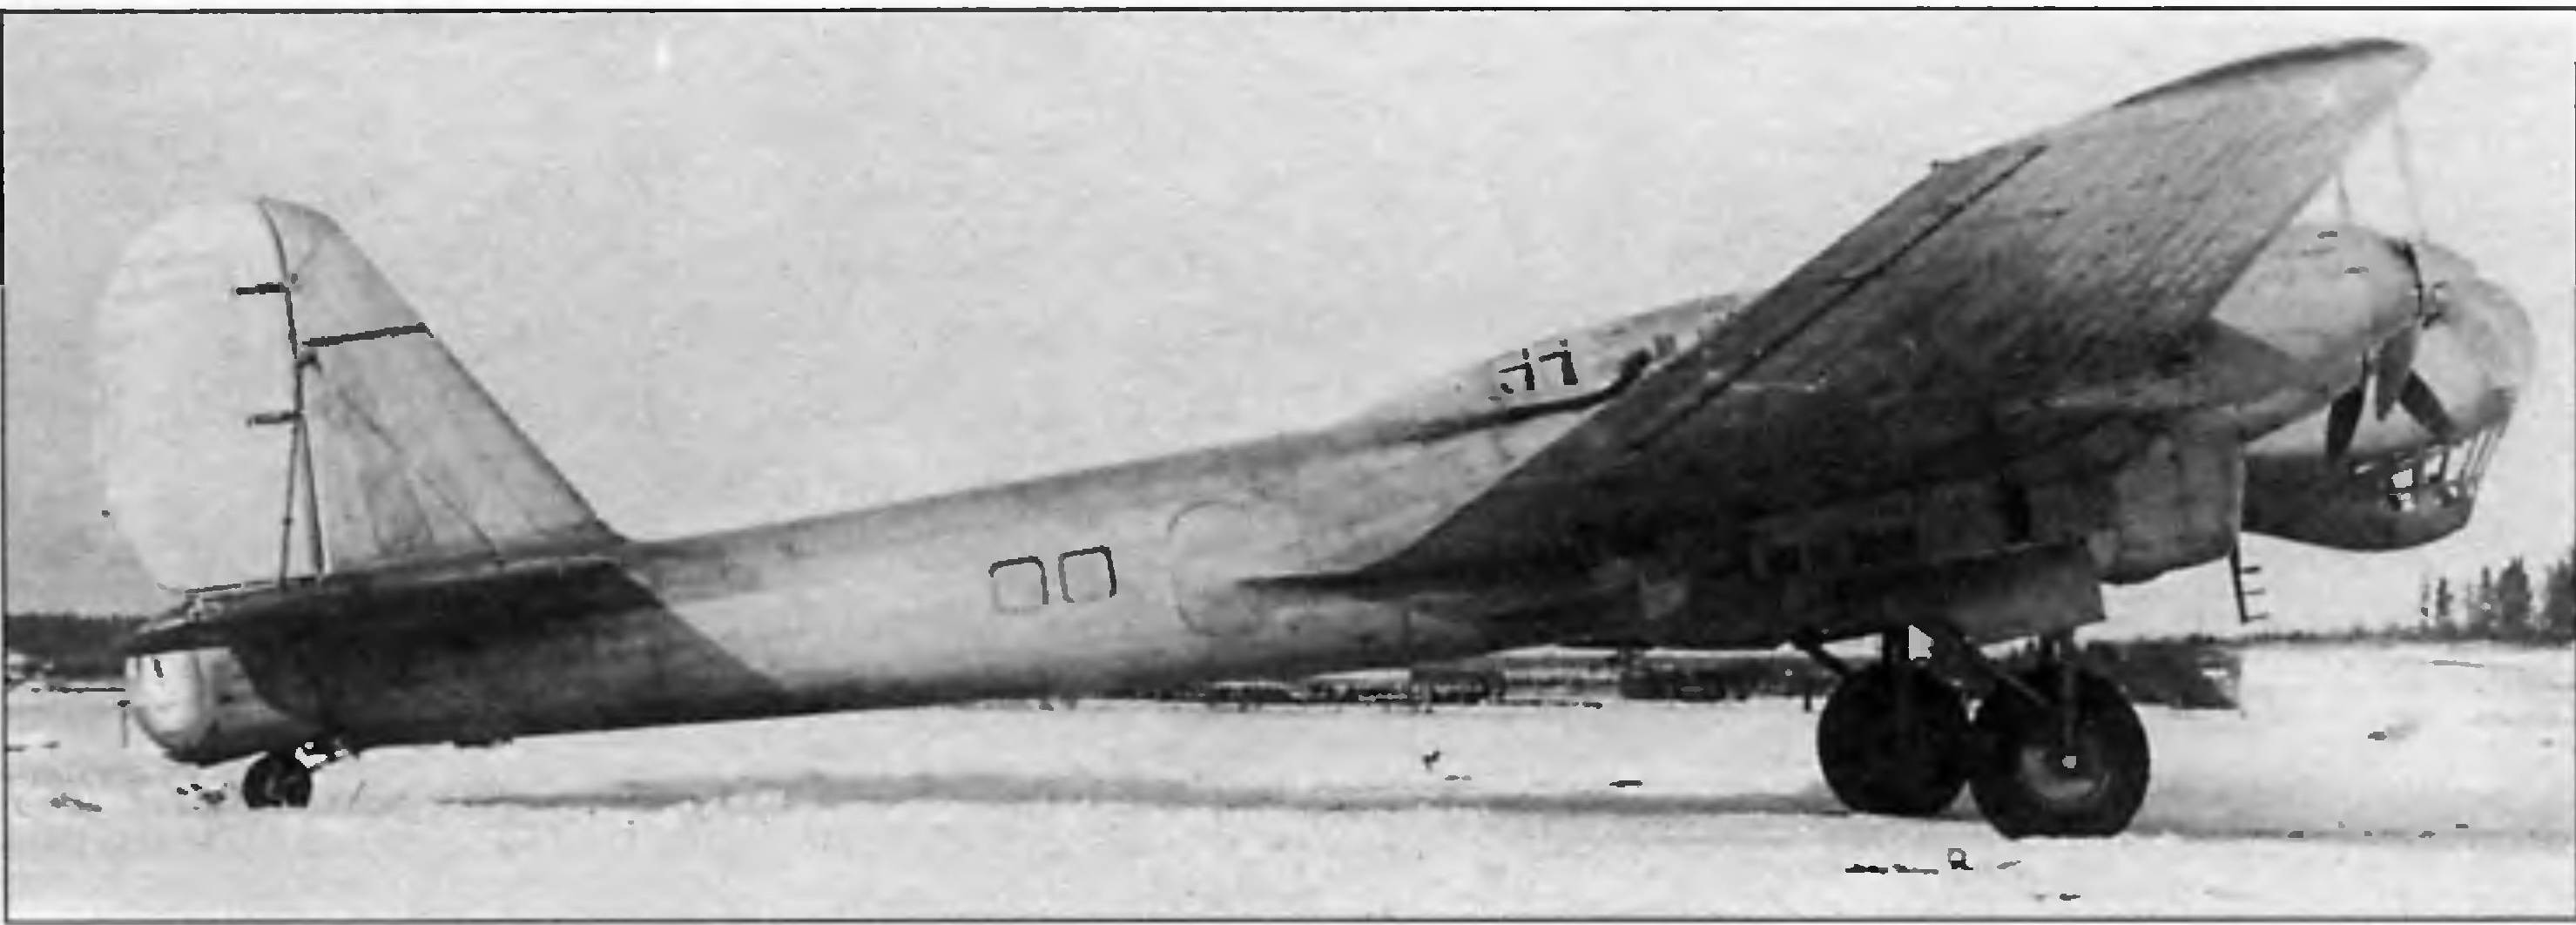 Прототип 100. ТБ-7 бомбардировщик. Самолет ант-42 ( ТБ-7). Пе-8 бомбардировщик. Ант-42 бомбардировщик.